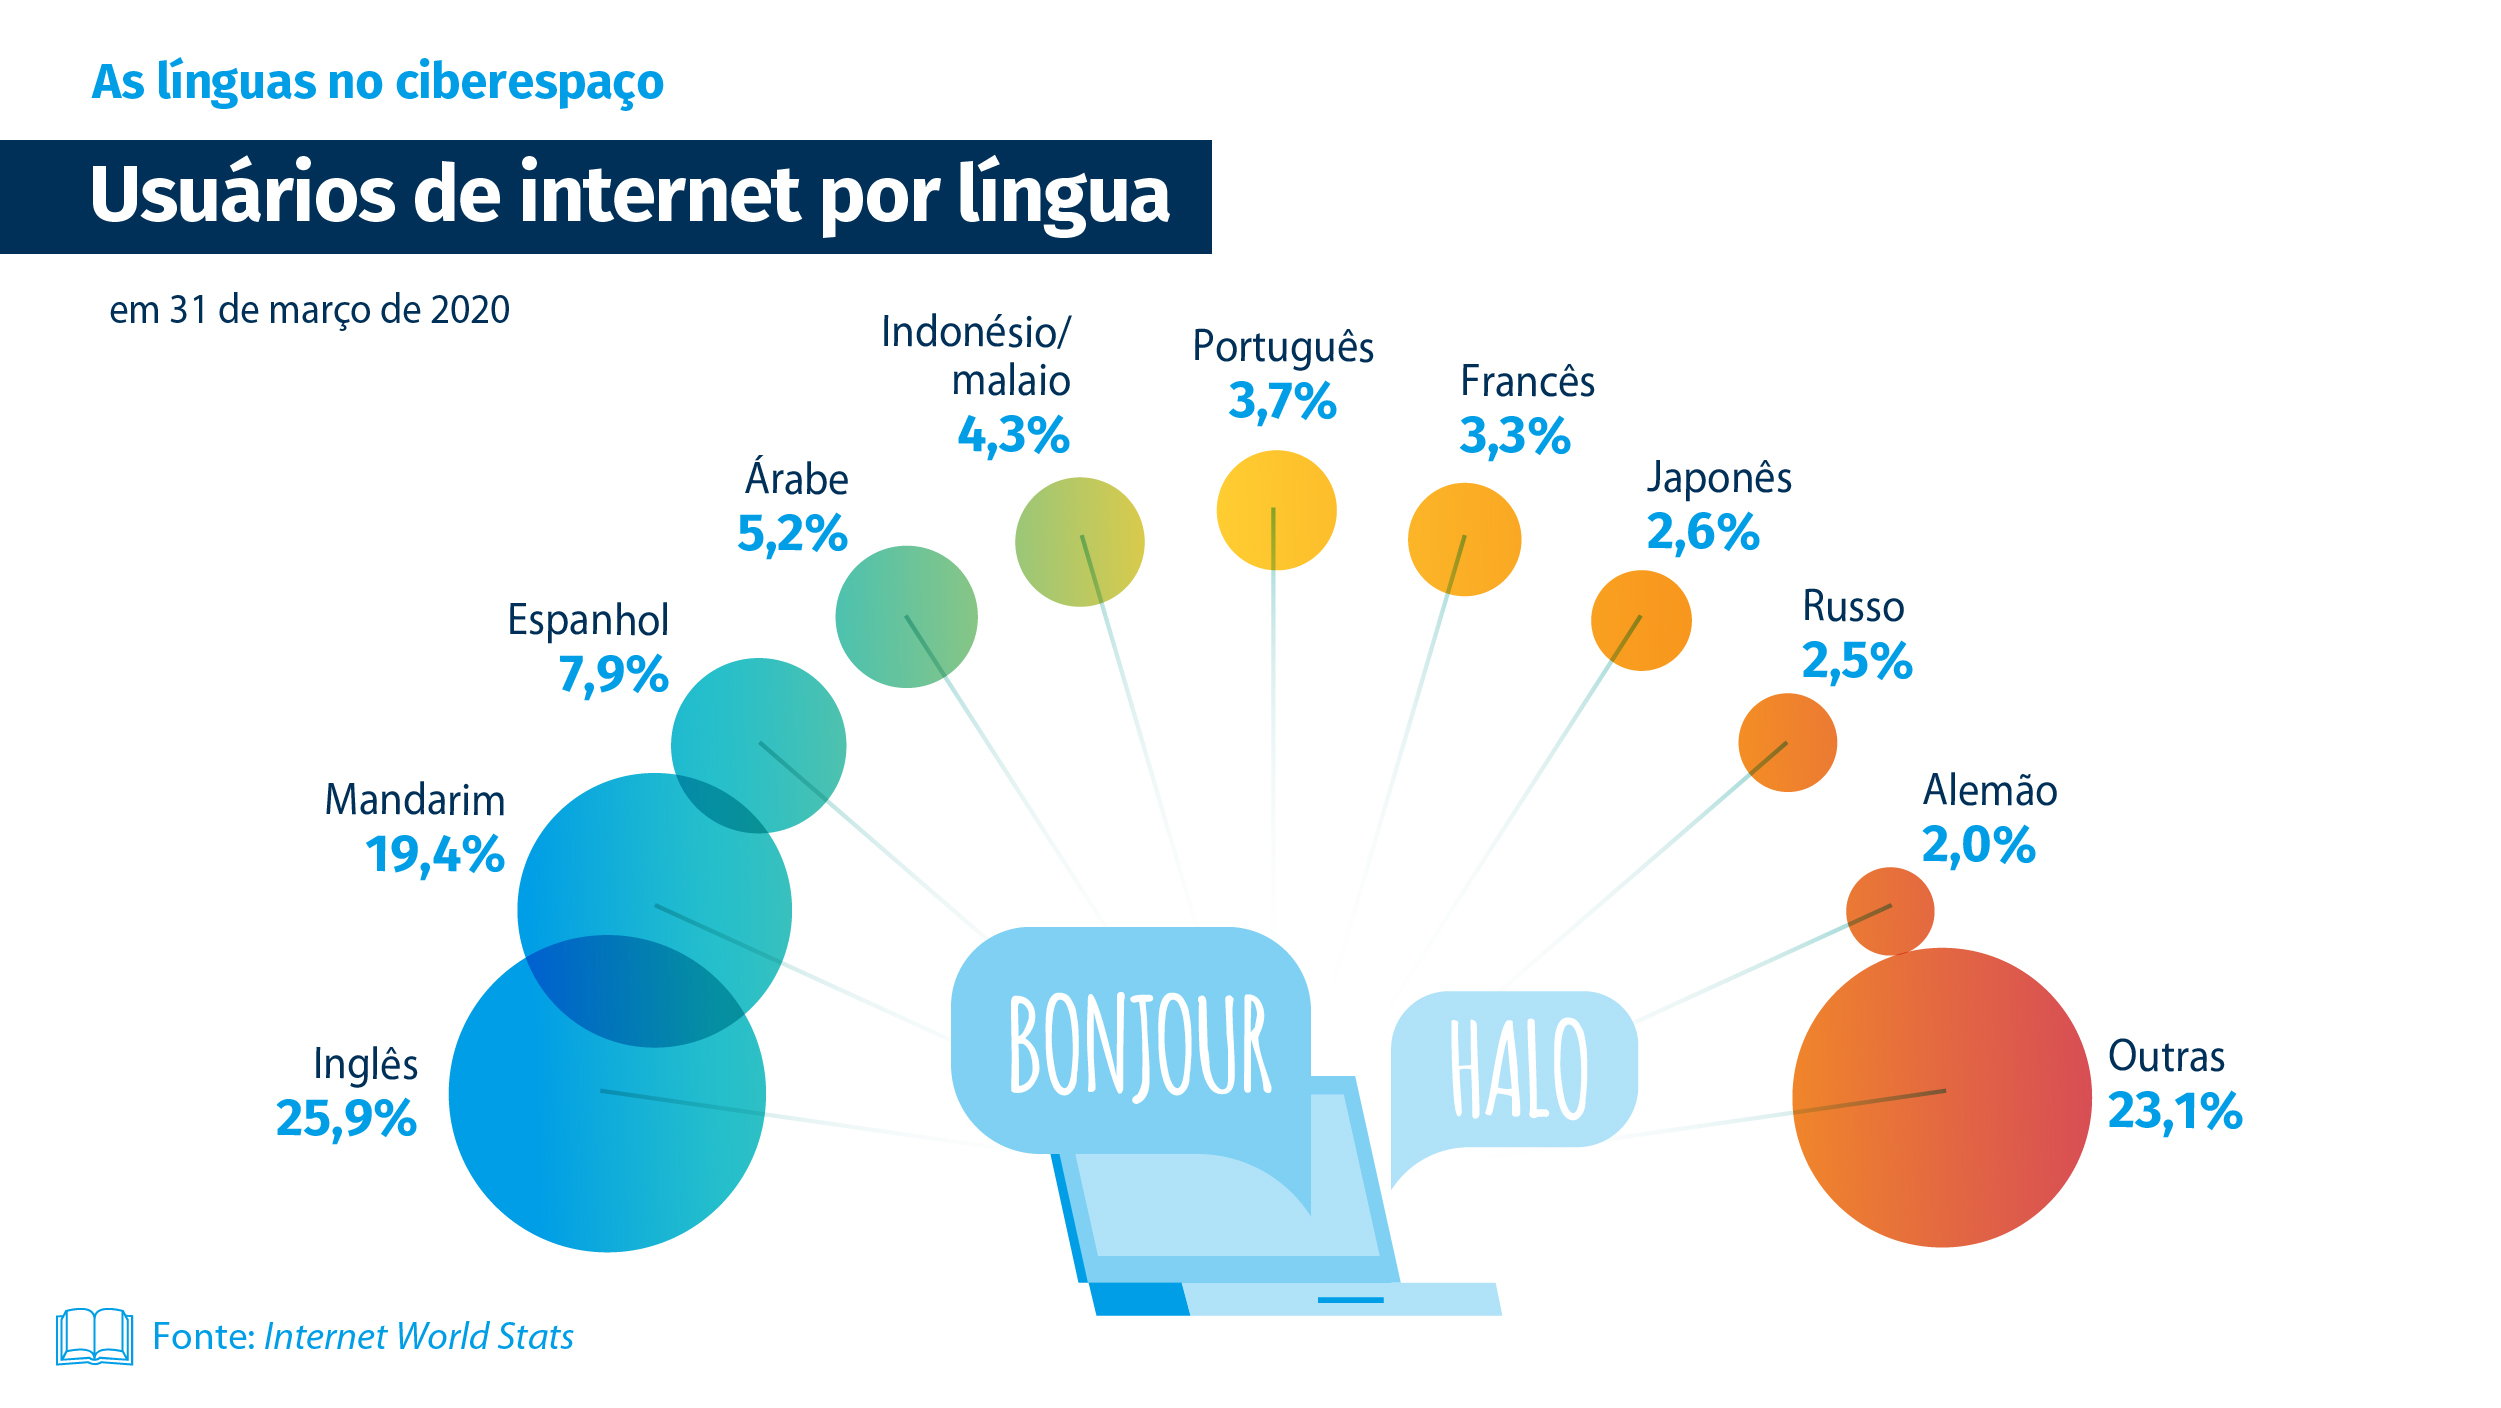 Impasse e empasse - O nosso idioma - Ciberdúvidas da Língua Portuguesa